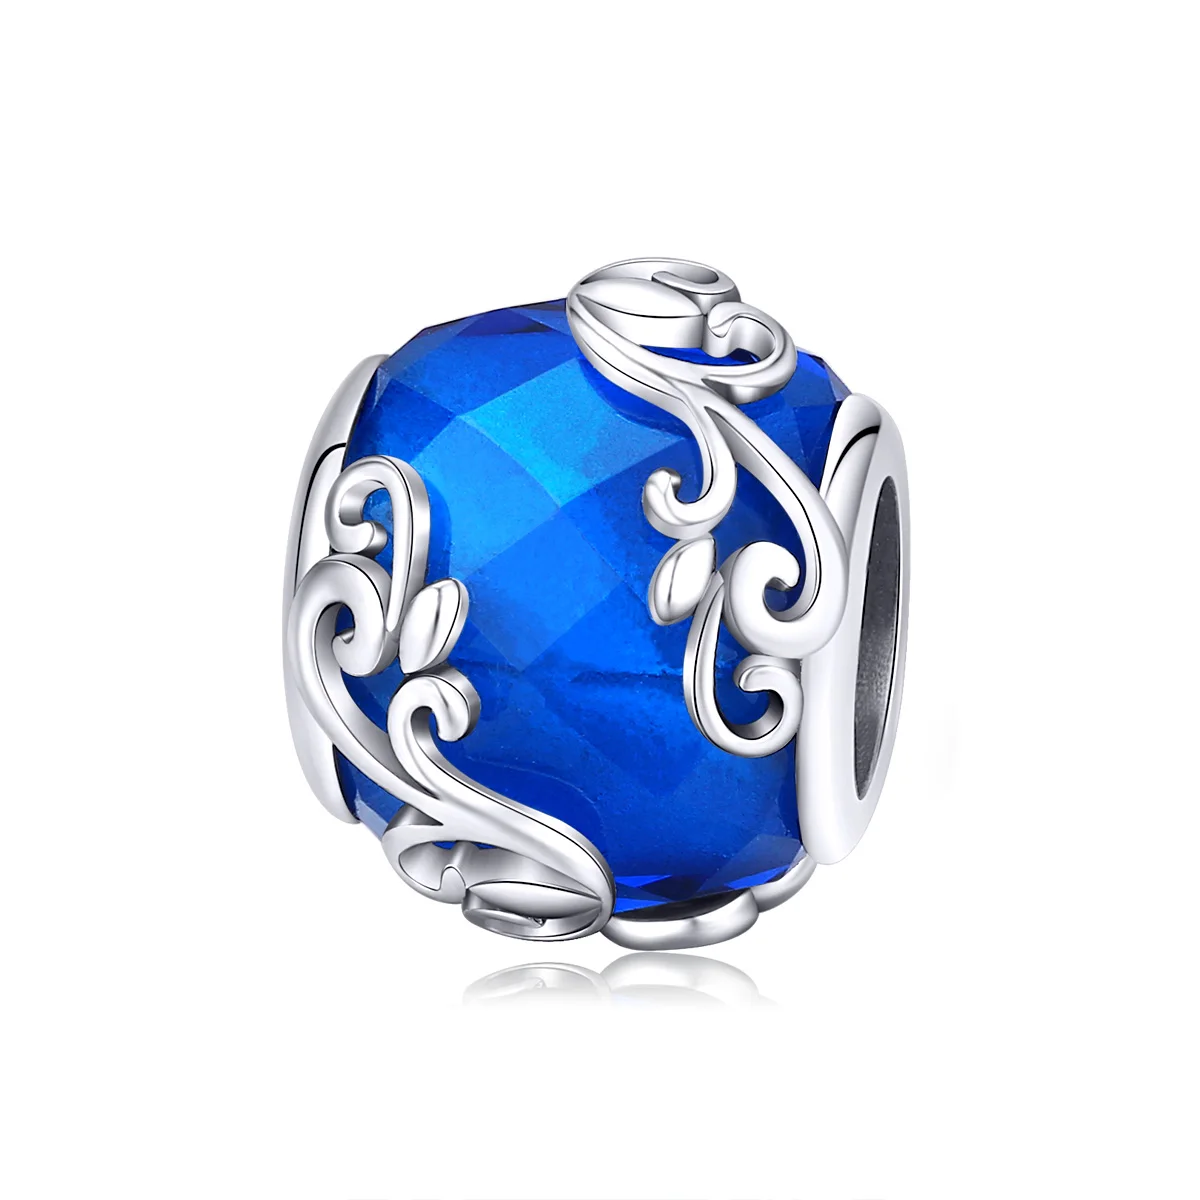 

BAMOER 925 Silver Beads Charm Jewelry Blue Round Design Vine Pattern fit Original Brand Bracelet Sterling Silver Jewelry BSC231